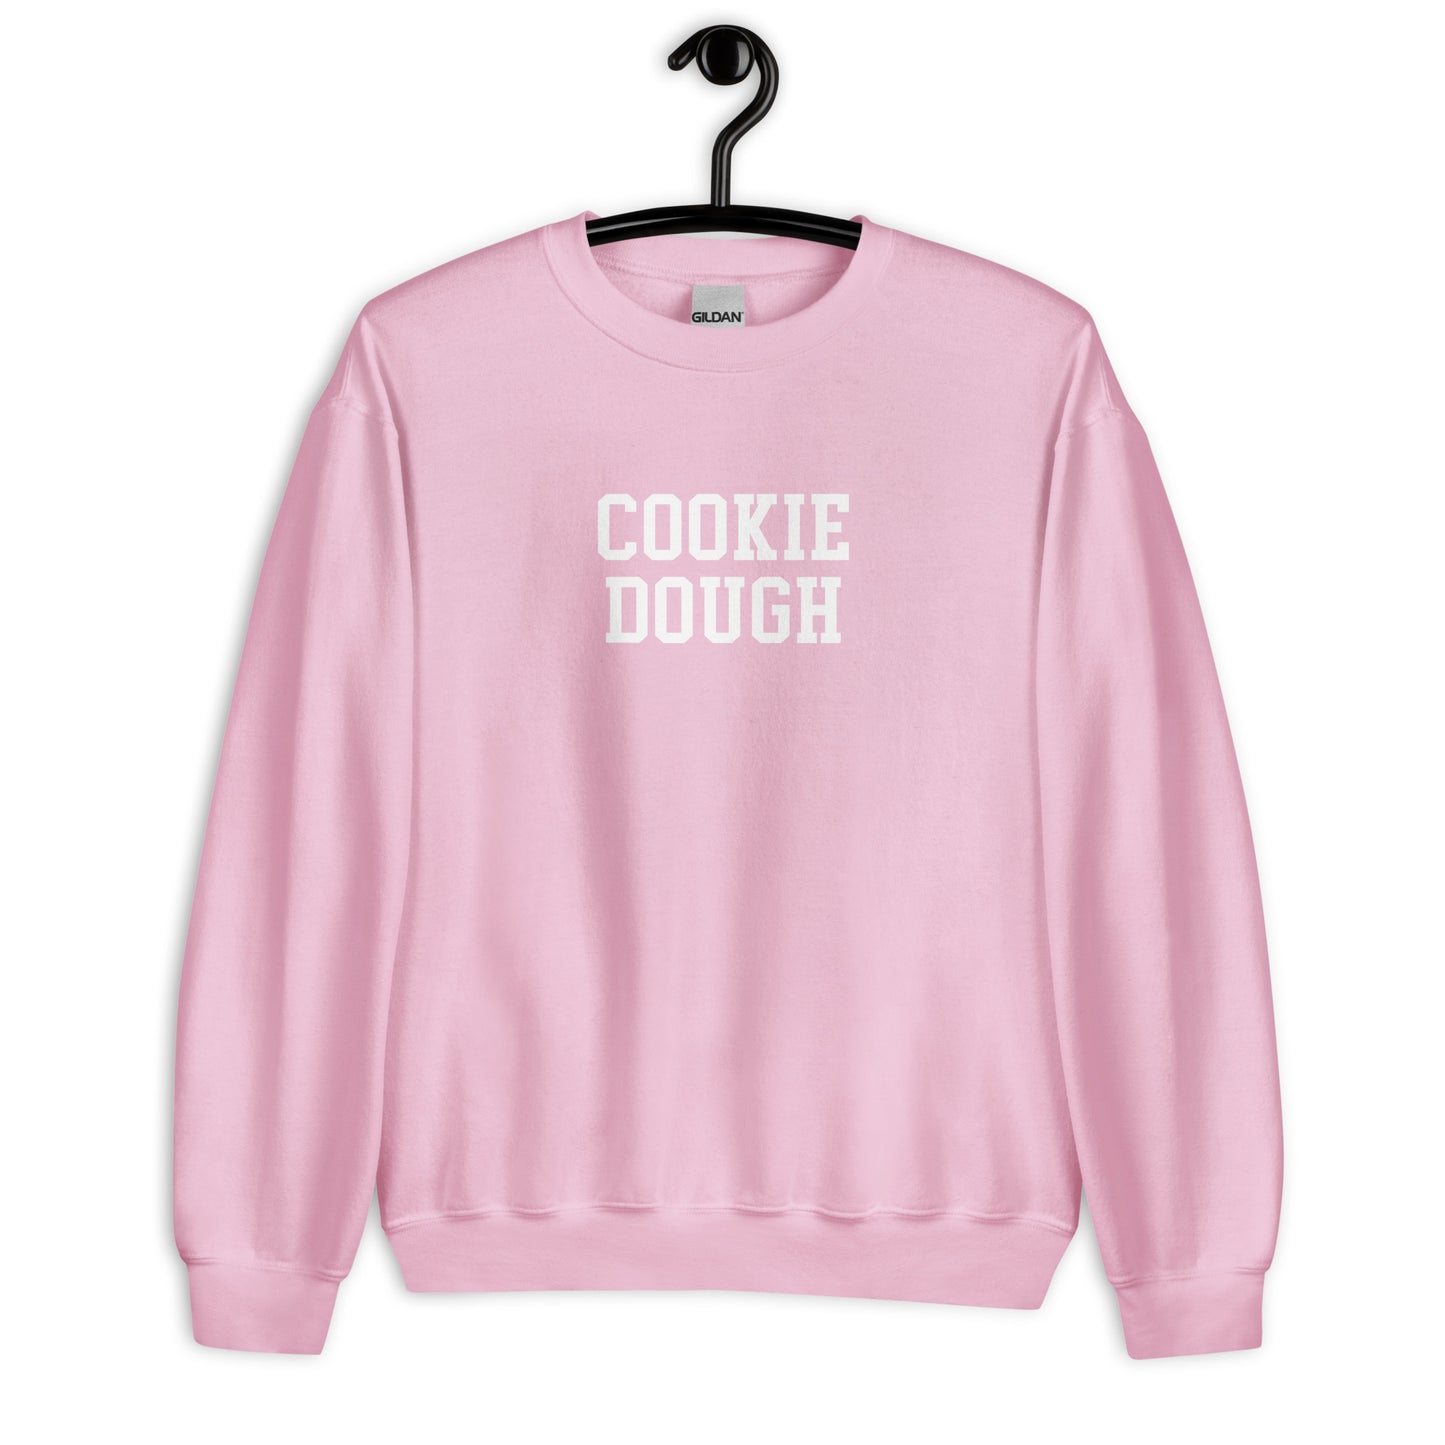 Cookie Dough Sweatshirt - Straight Font